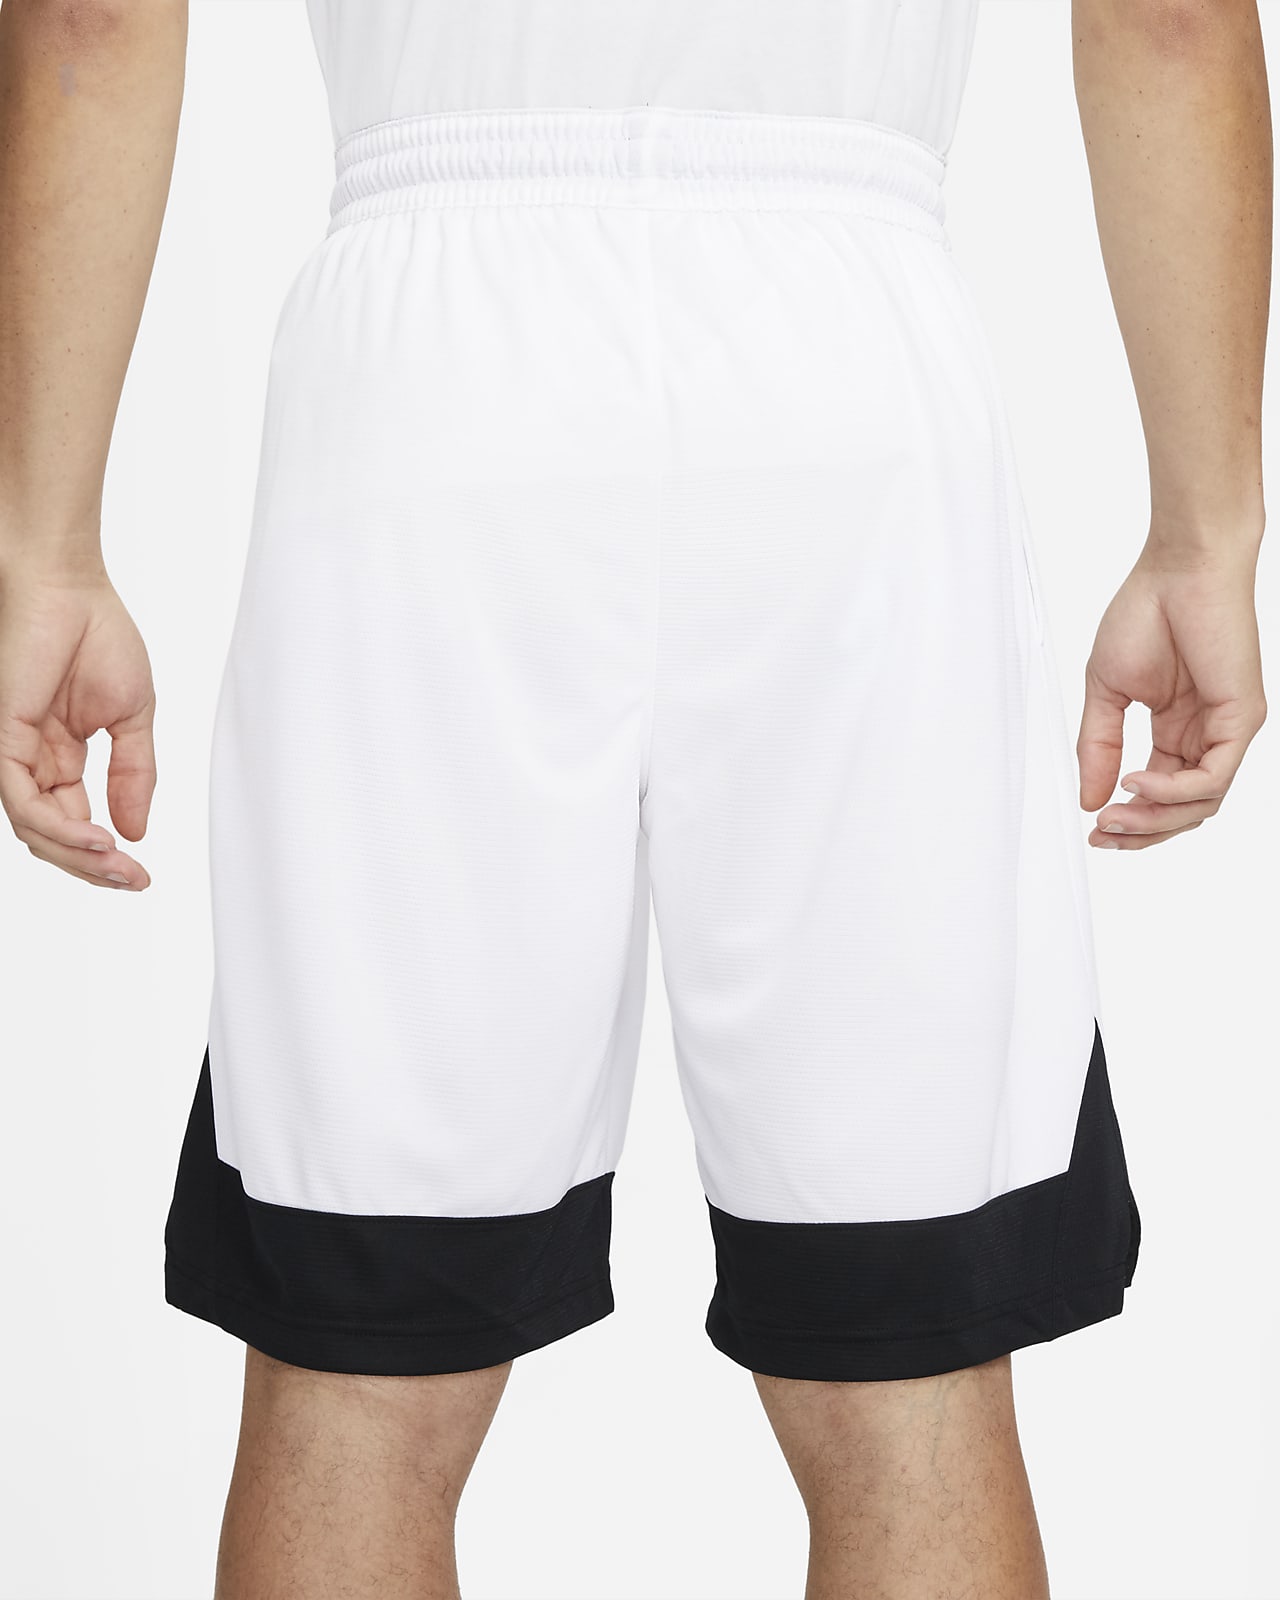 Nike Knicks Dri-Fit Icon Shorts